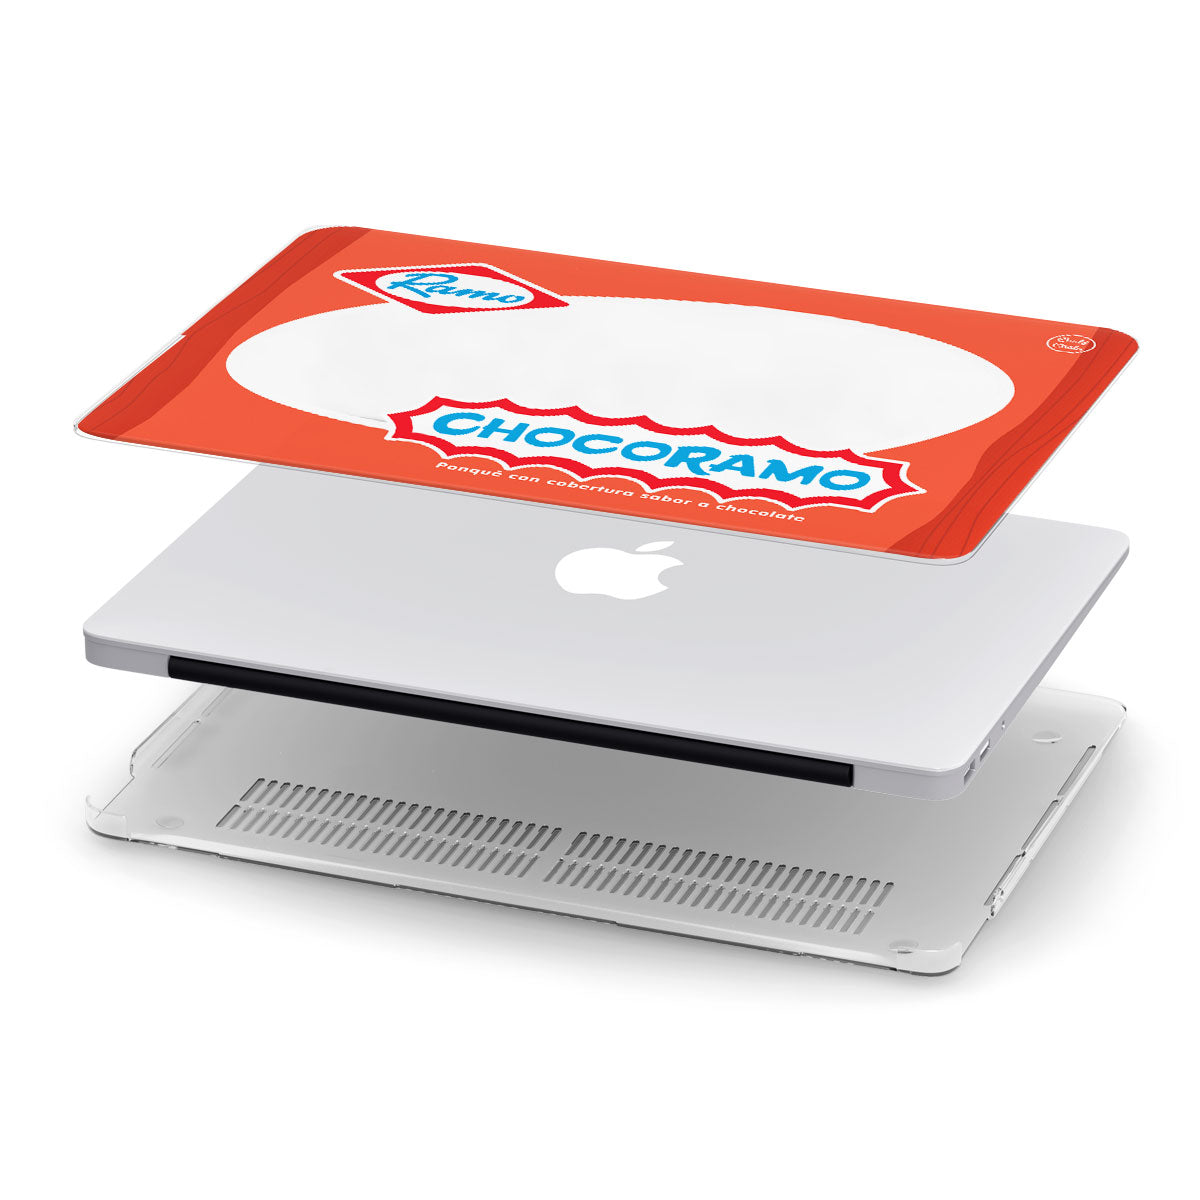 Hard Case para Macbook Empaque Chocoramo